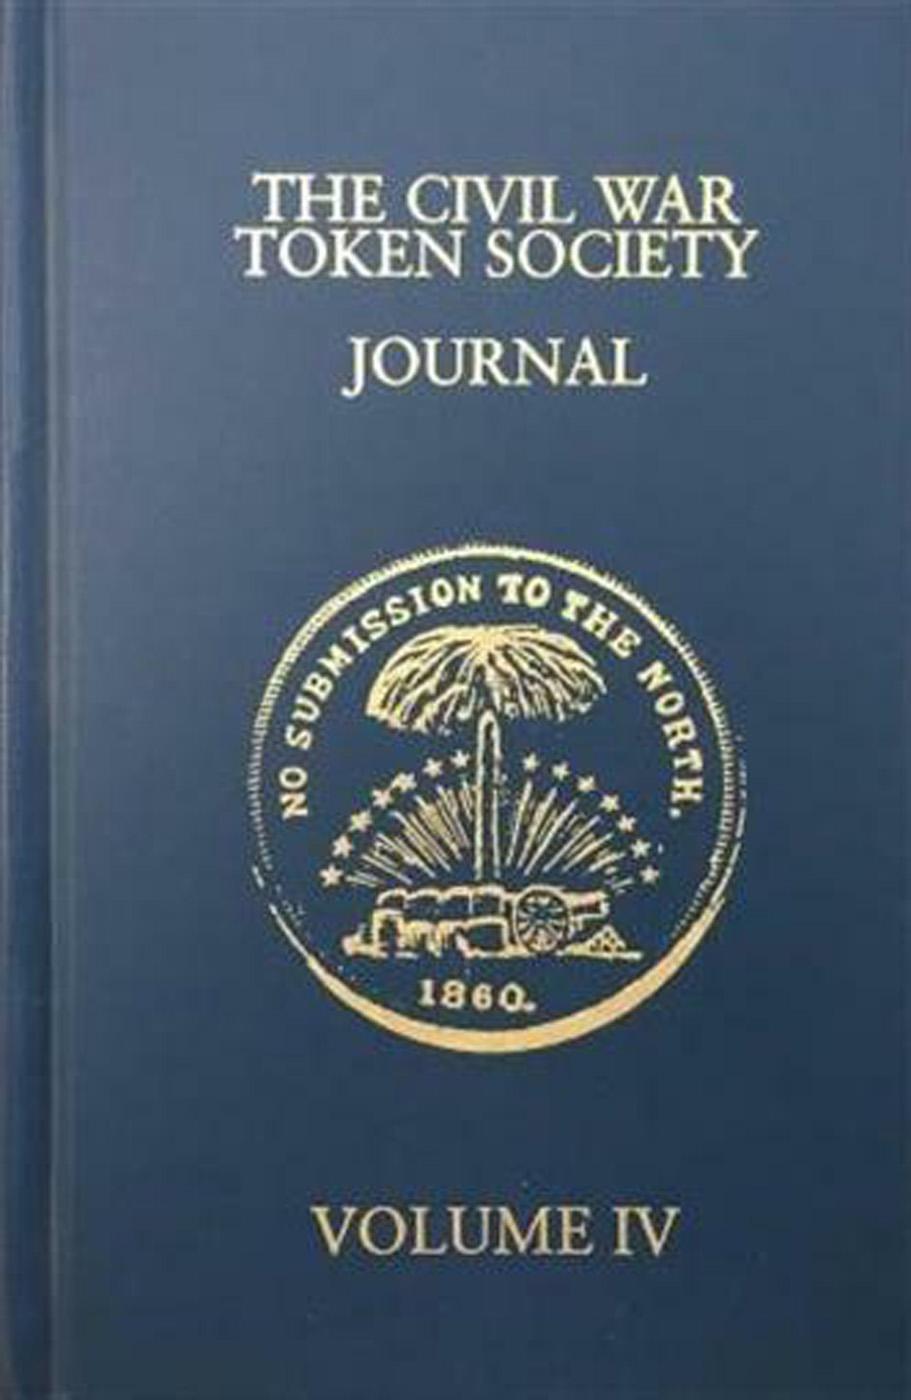 The Civil War Token Society Journal IV Volumes 16-20